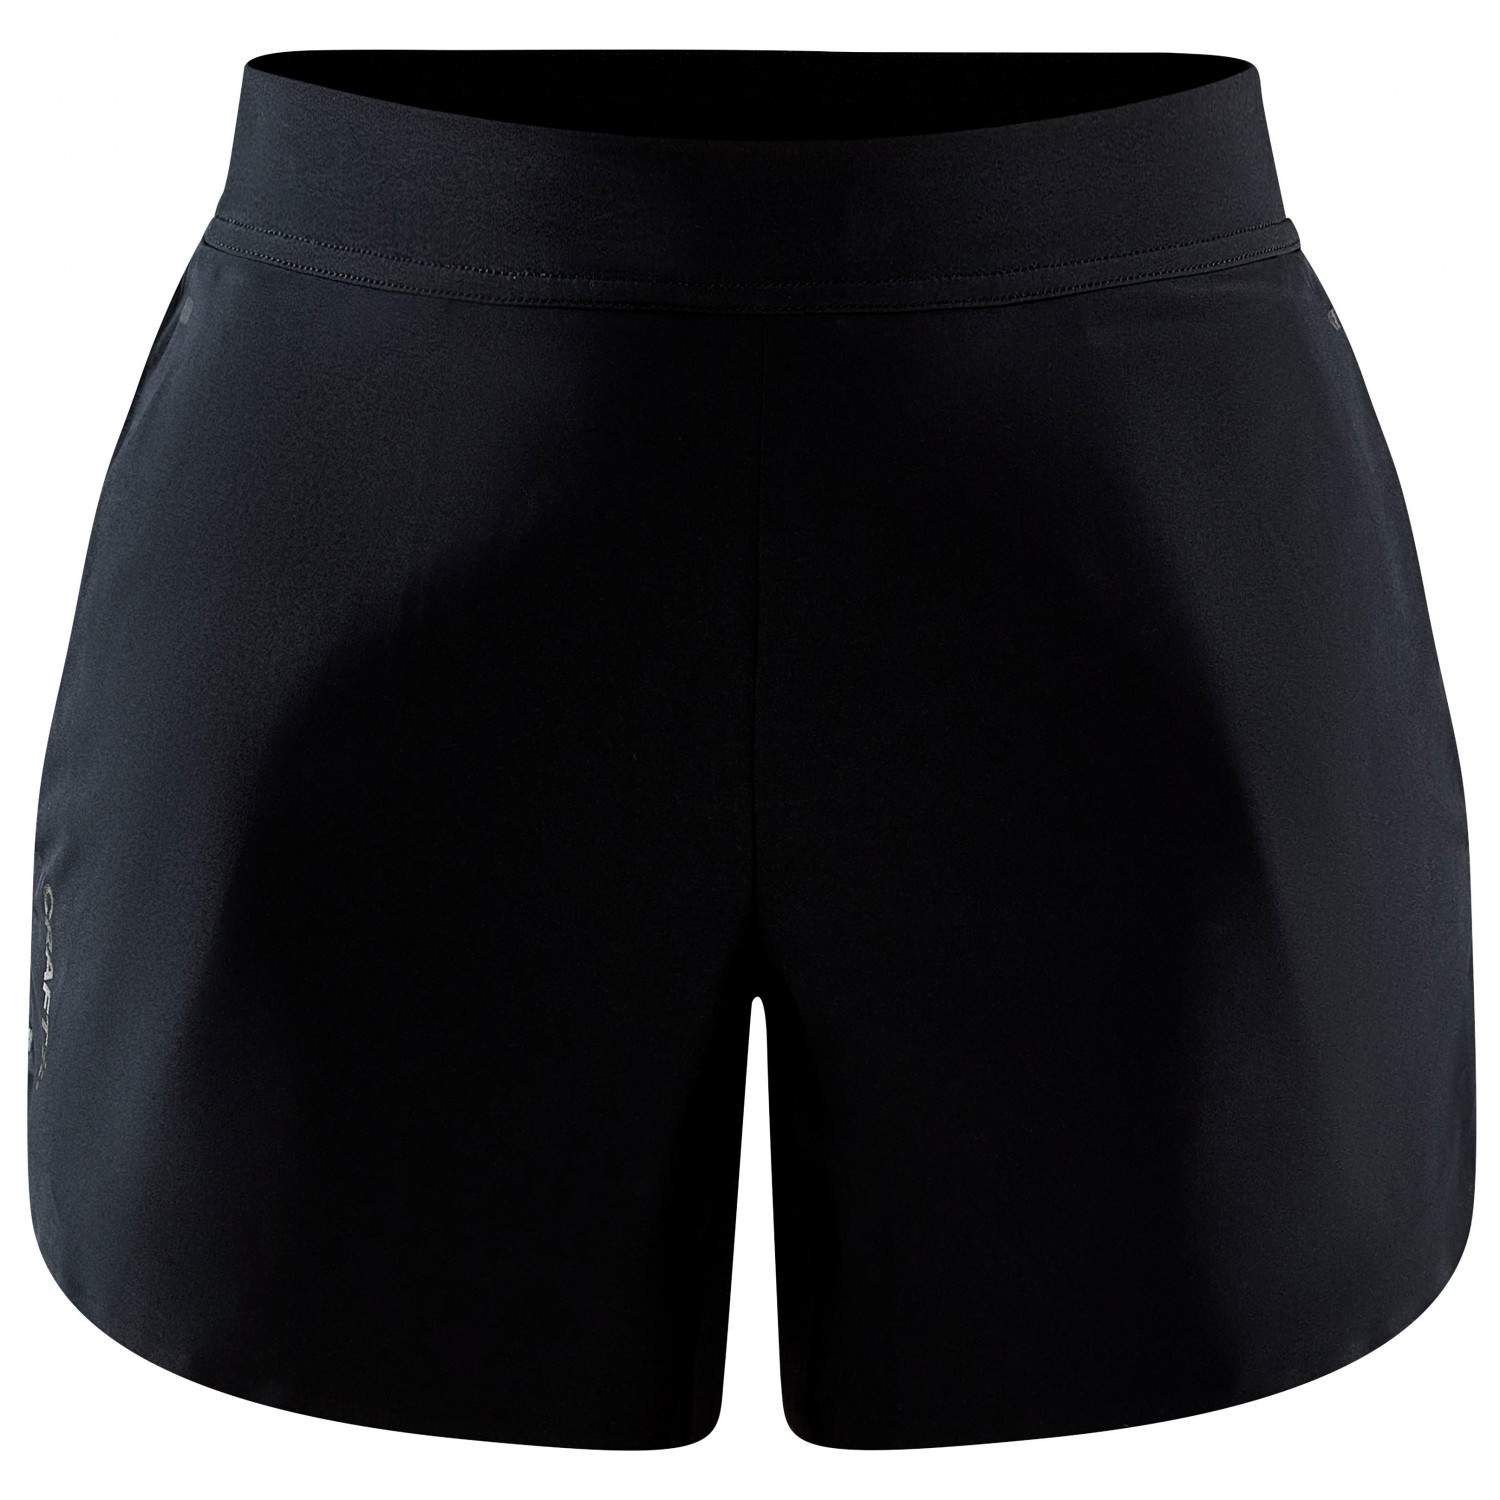 Шорты для бега Craft Women's Advanced Essence 5 Stretch Shorts, черный